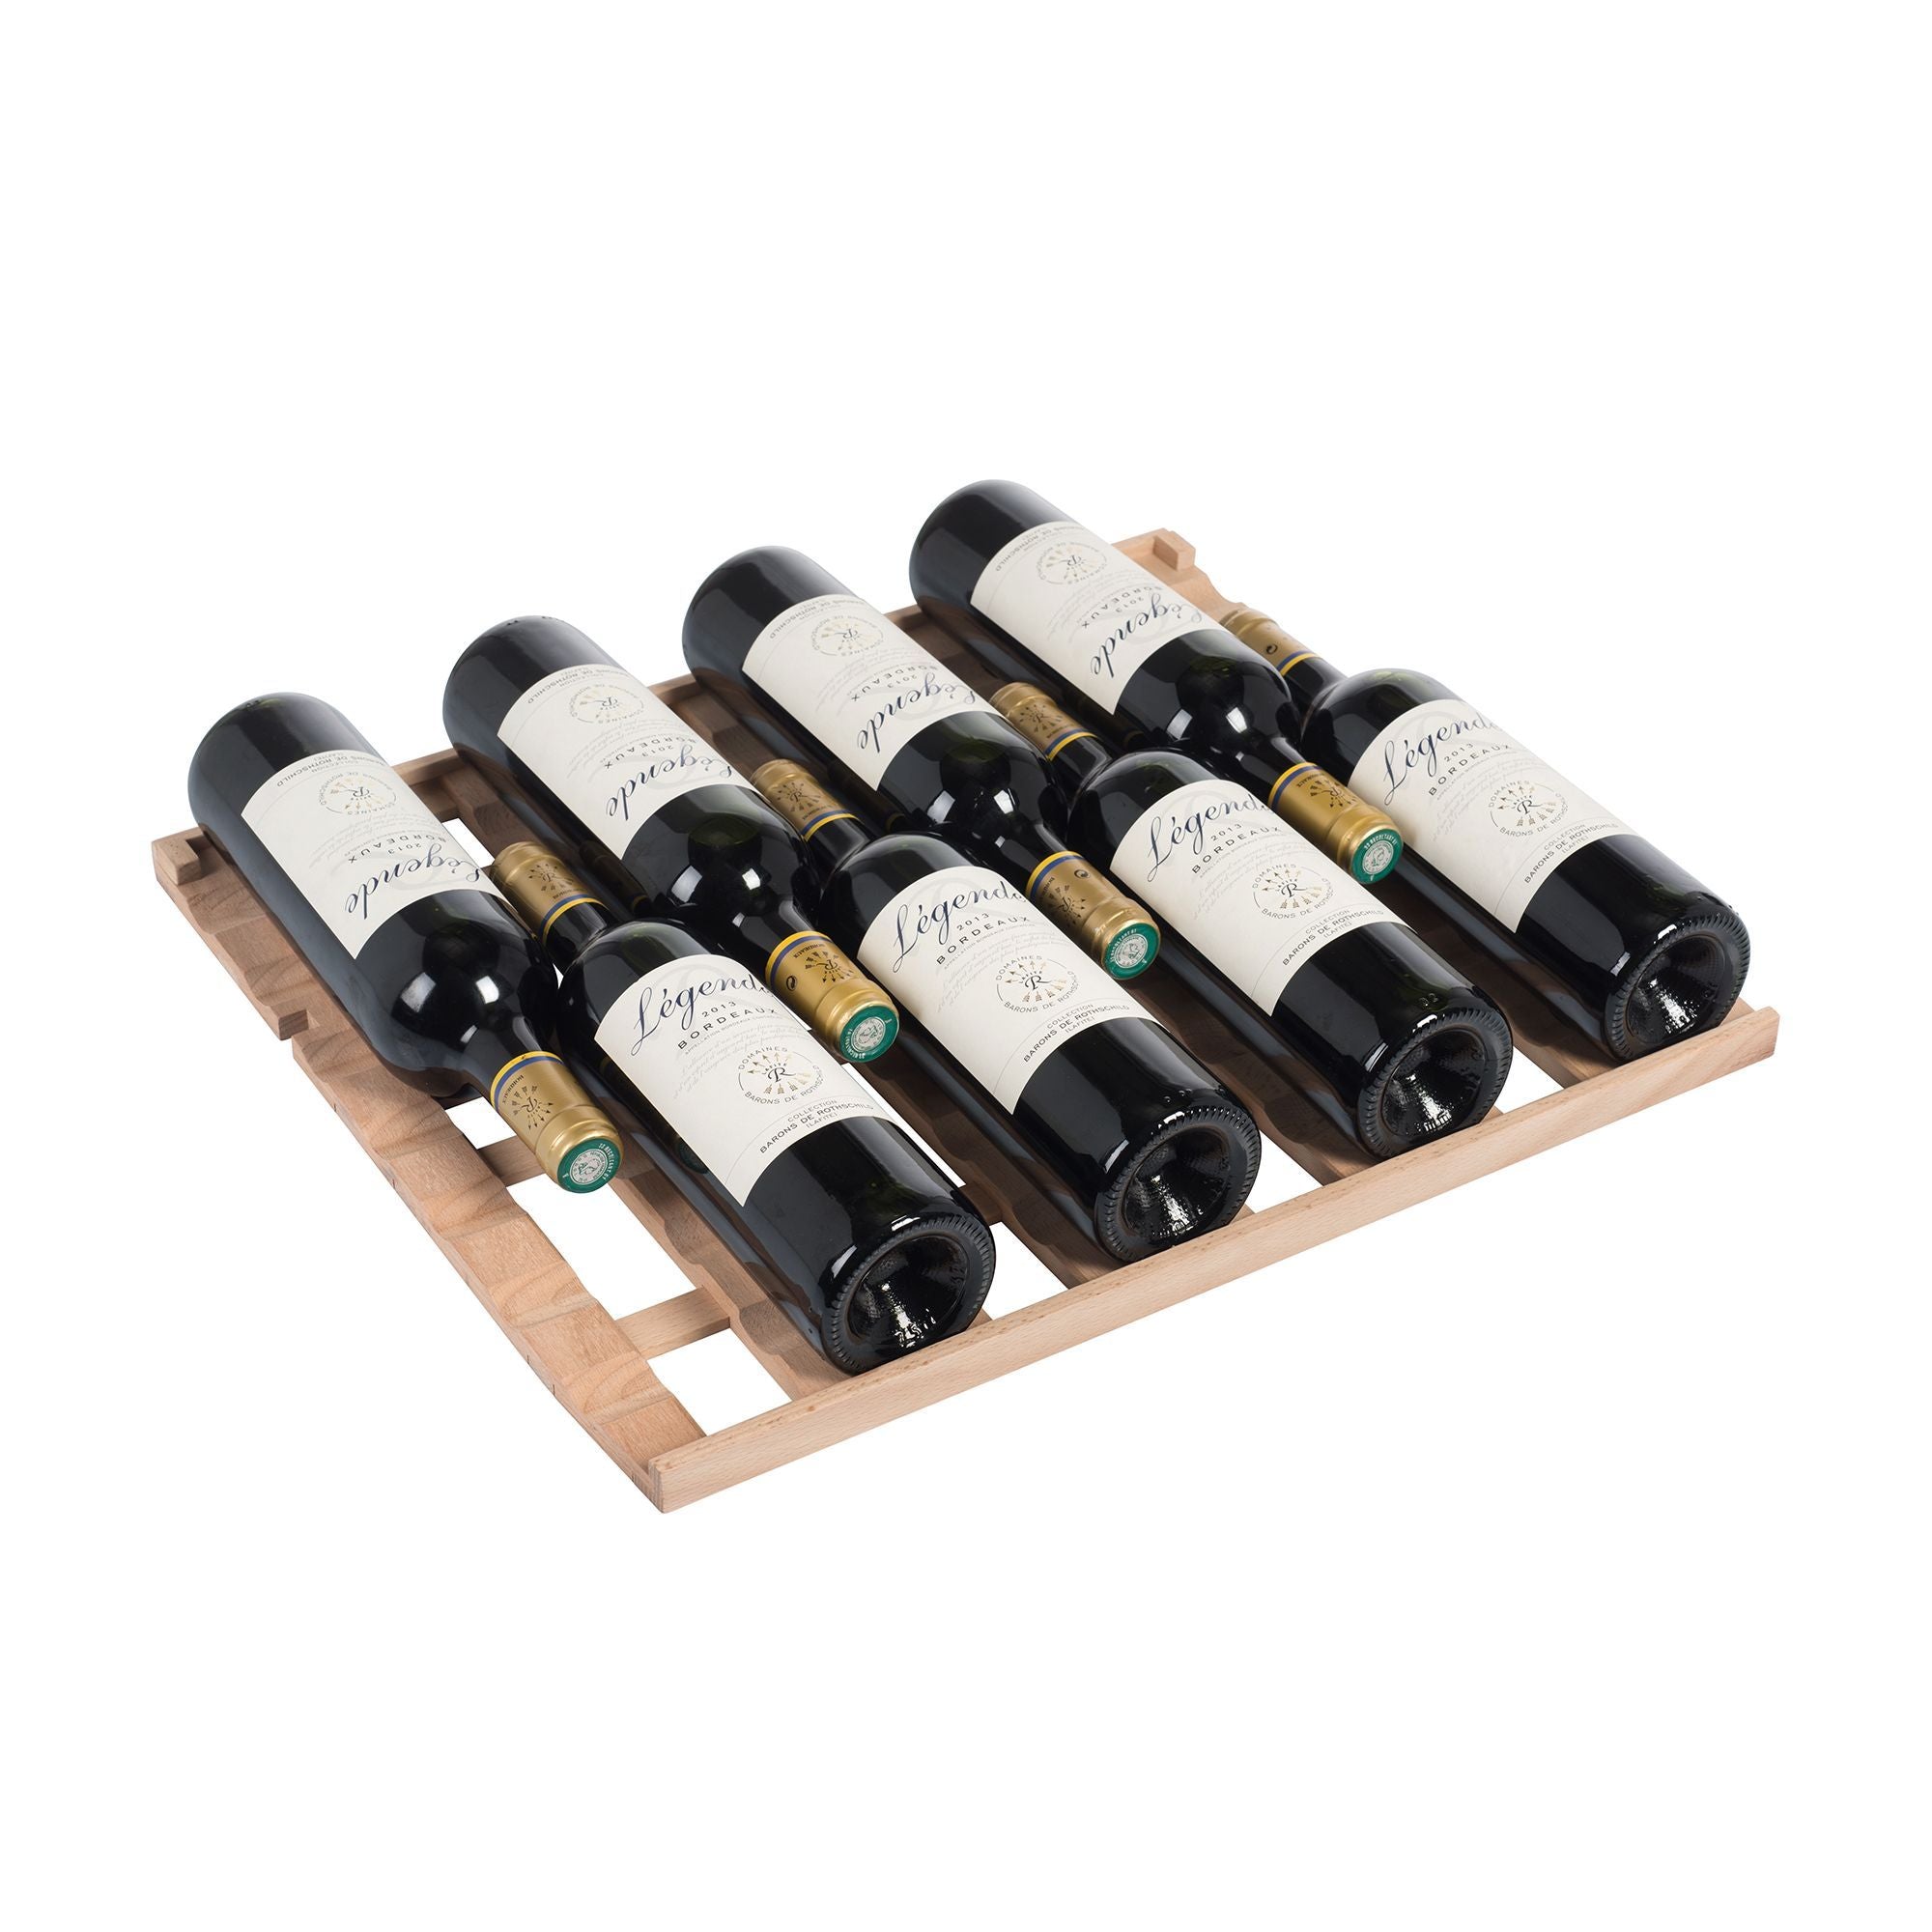 Avintage AVU53PREMIUM Wine cabinet